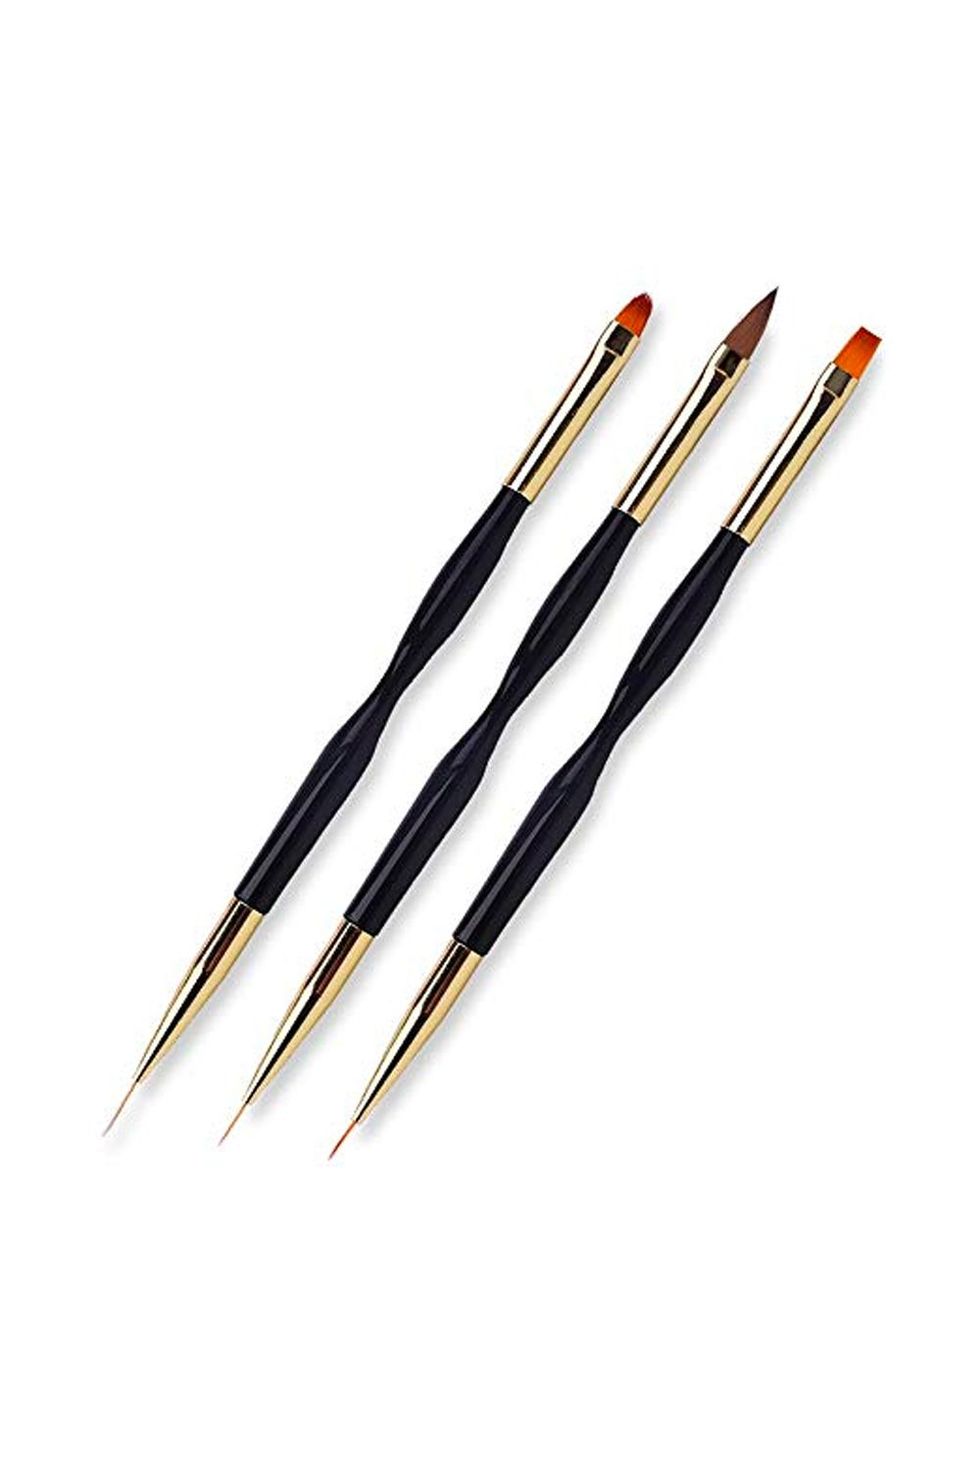 Nail Art Liner Brushes Set, 6Pcs Nail Art Design Brush Striping Thin Long  Lines Dotting Drawing Pen, UV Gel Polish Painting Metal Handle Striper